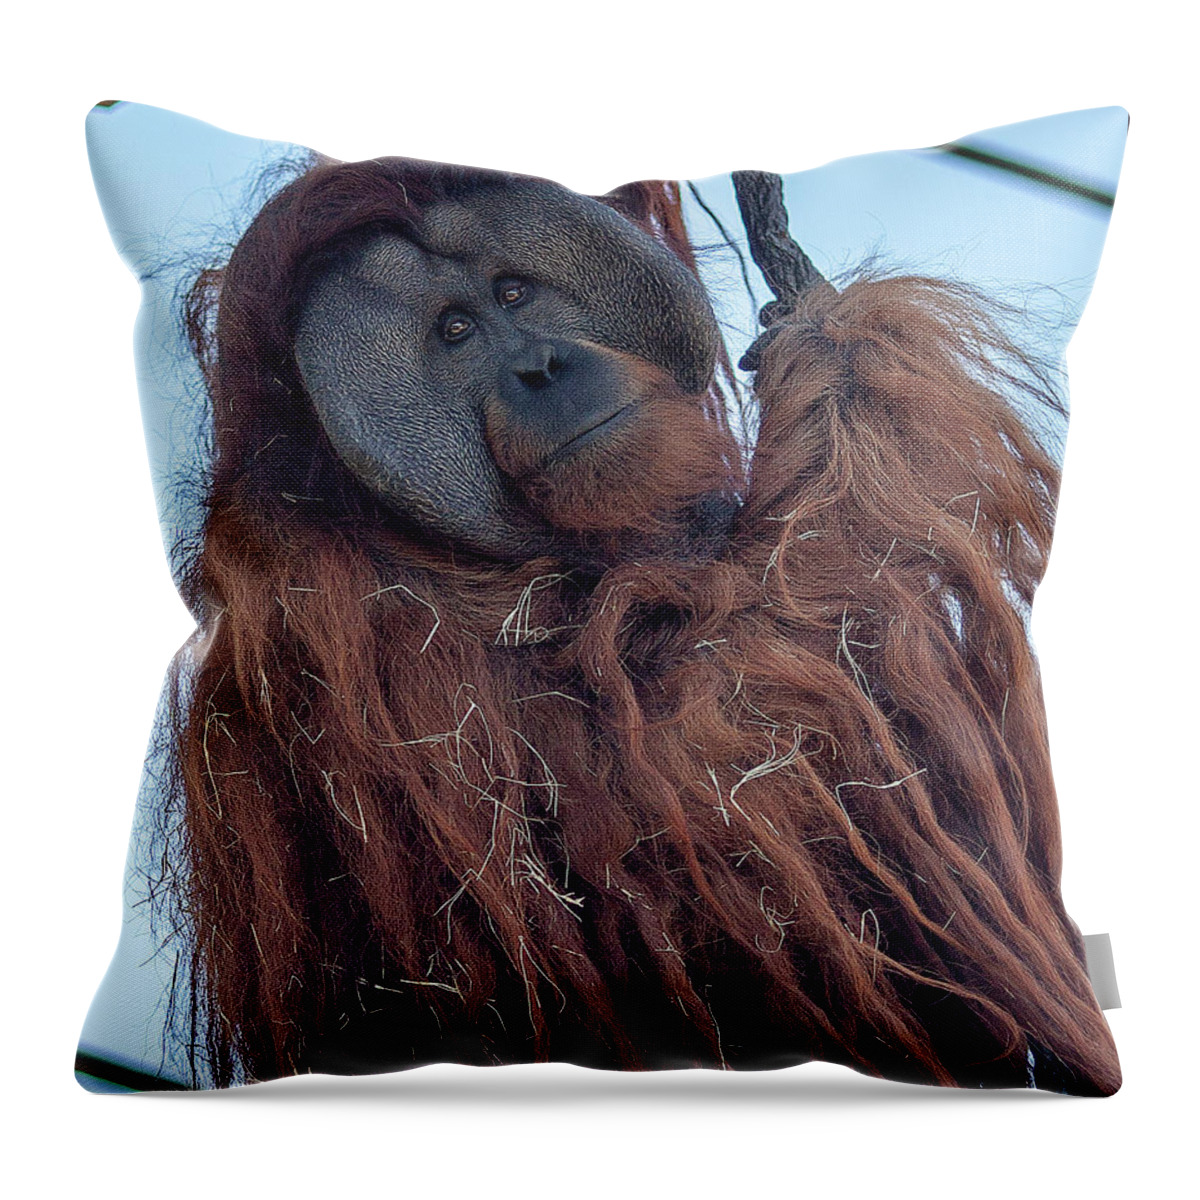 Jungle Throw Pillow featuring the photograph Orangutan by Al Hurley